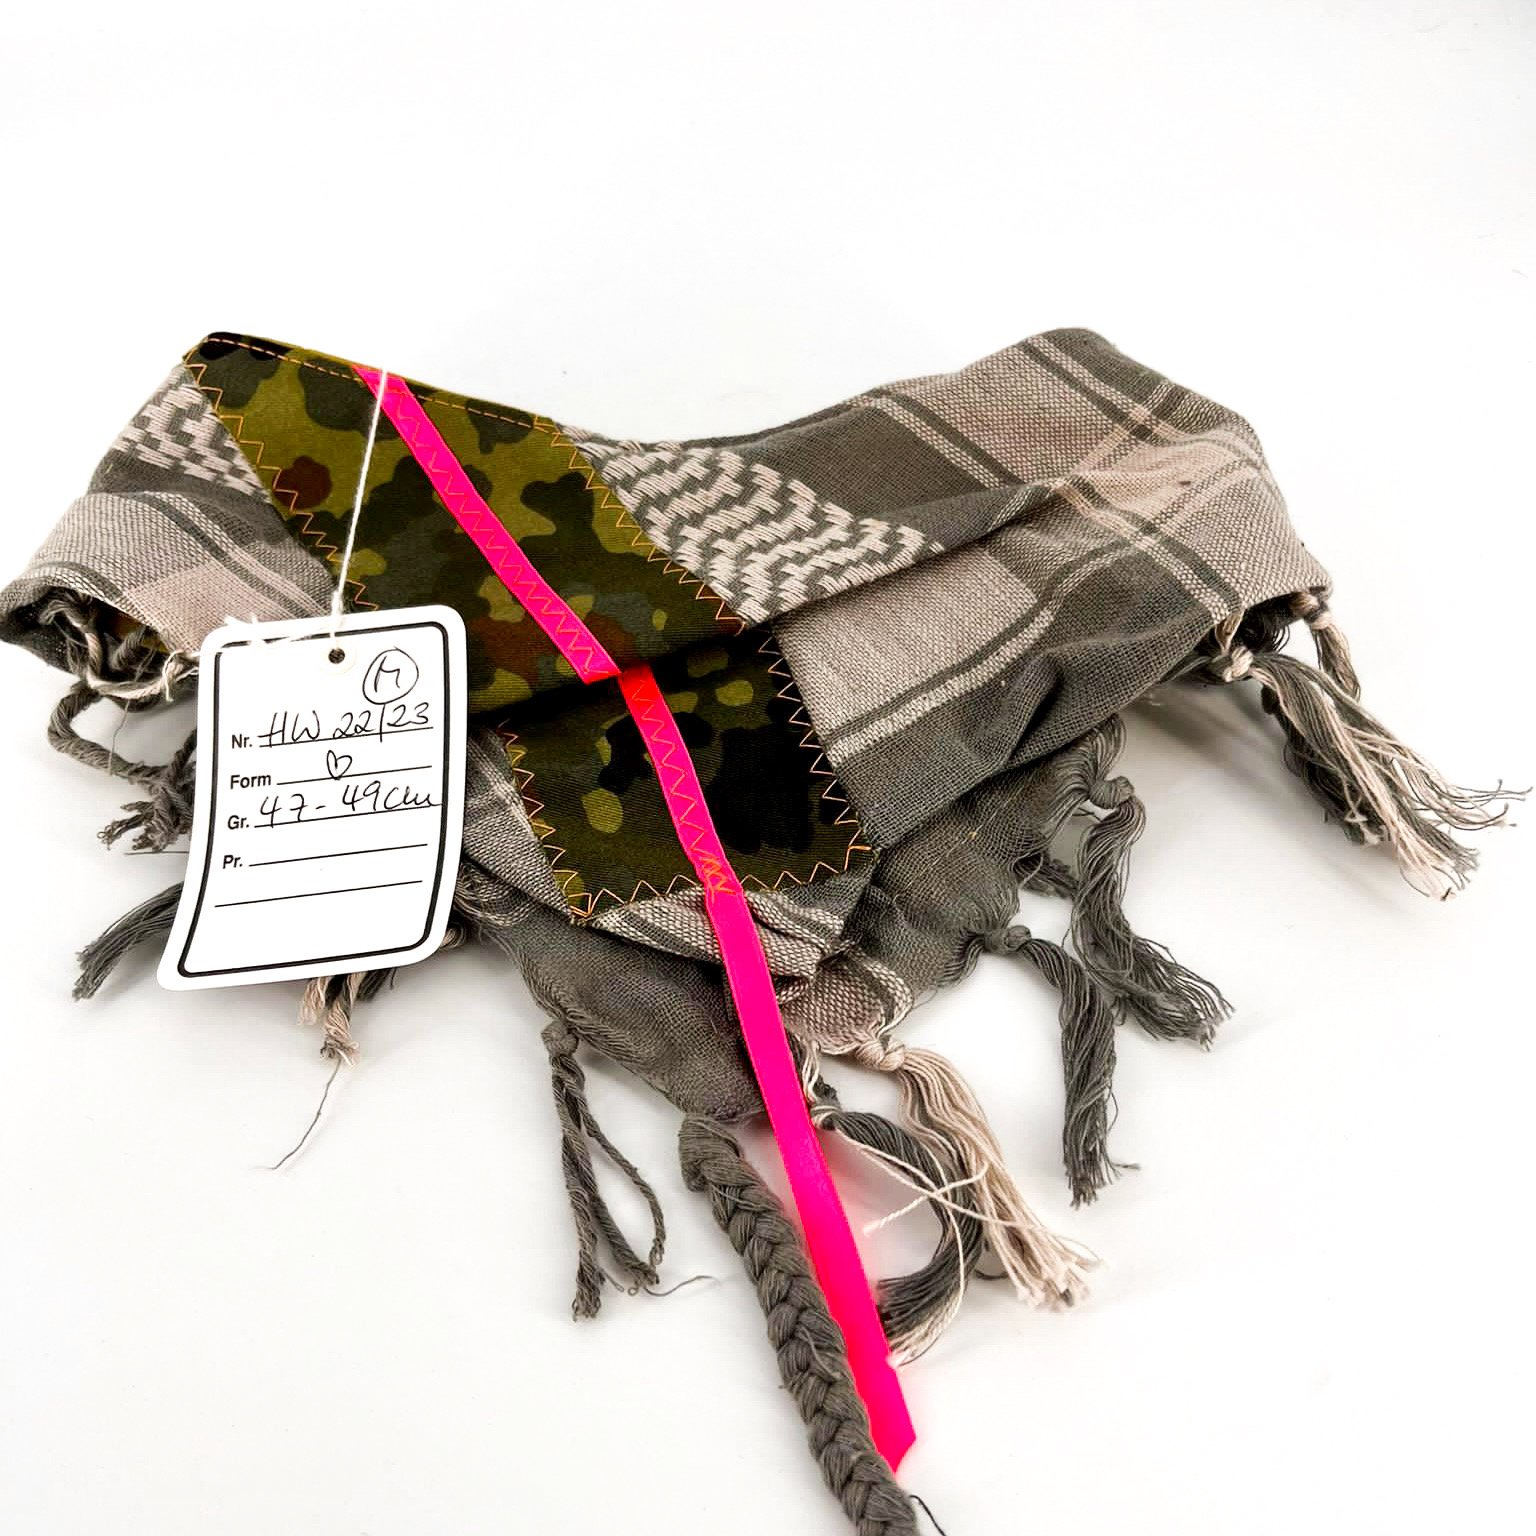 HundePali Grey 'HW 22/23' - Pink Camo - M - 47-49 cm